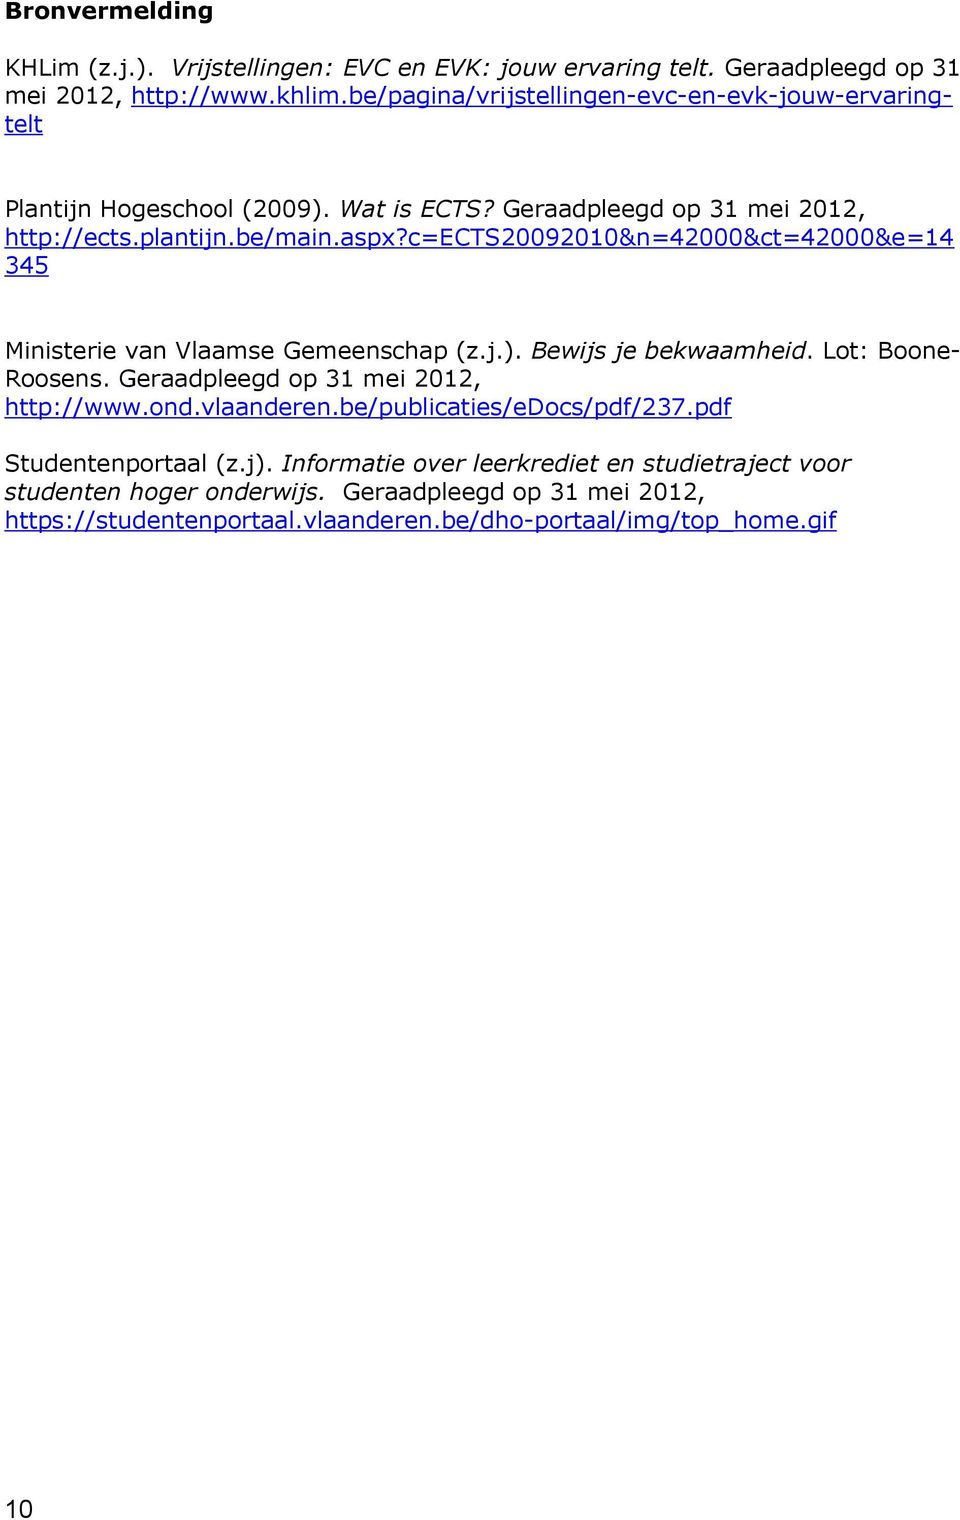 c=ects20092010&n=42000&ct=42000&e=14 345 Ministerie van Vlaamse Gemeenschap (z.j.). Bewijs je bekwaamheid. Lot: Boone- Roosens. Geraadpleegd op 31 mei 2012, http://www.ond.